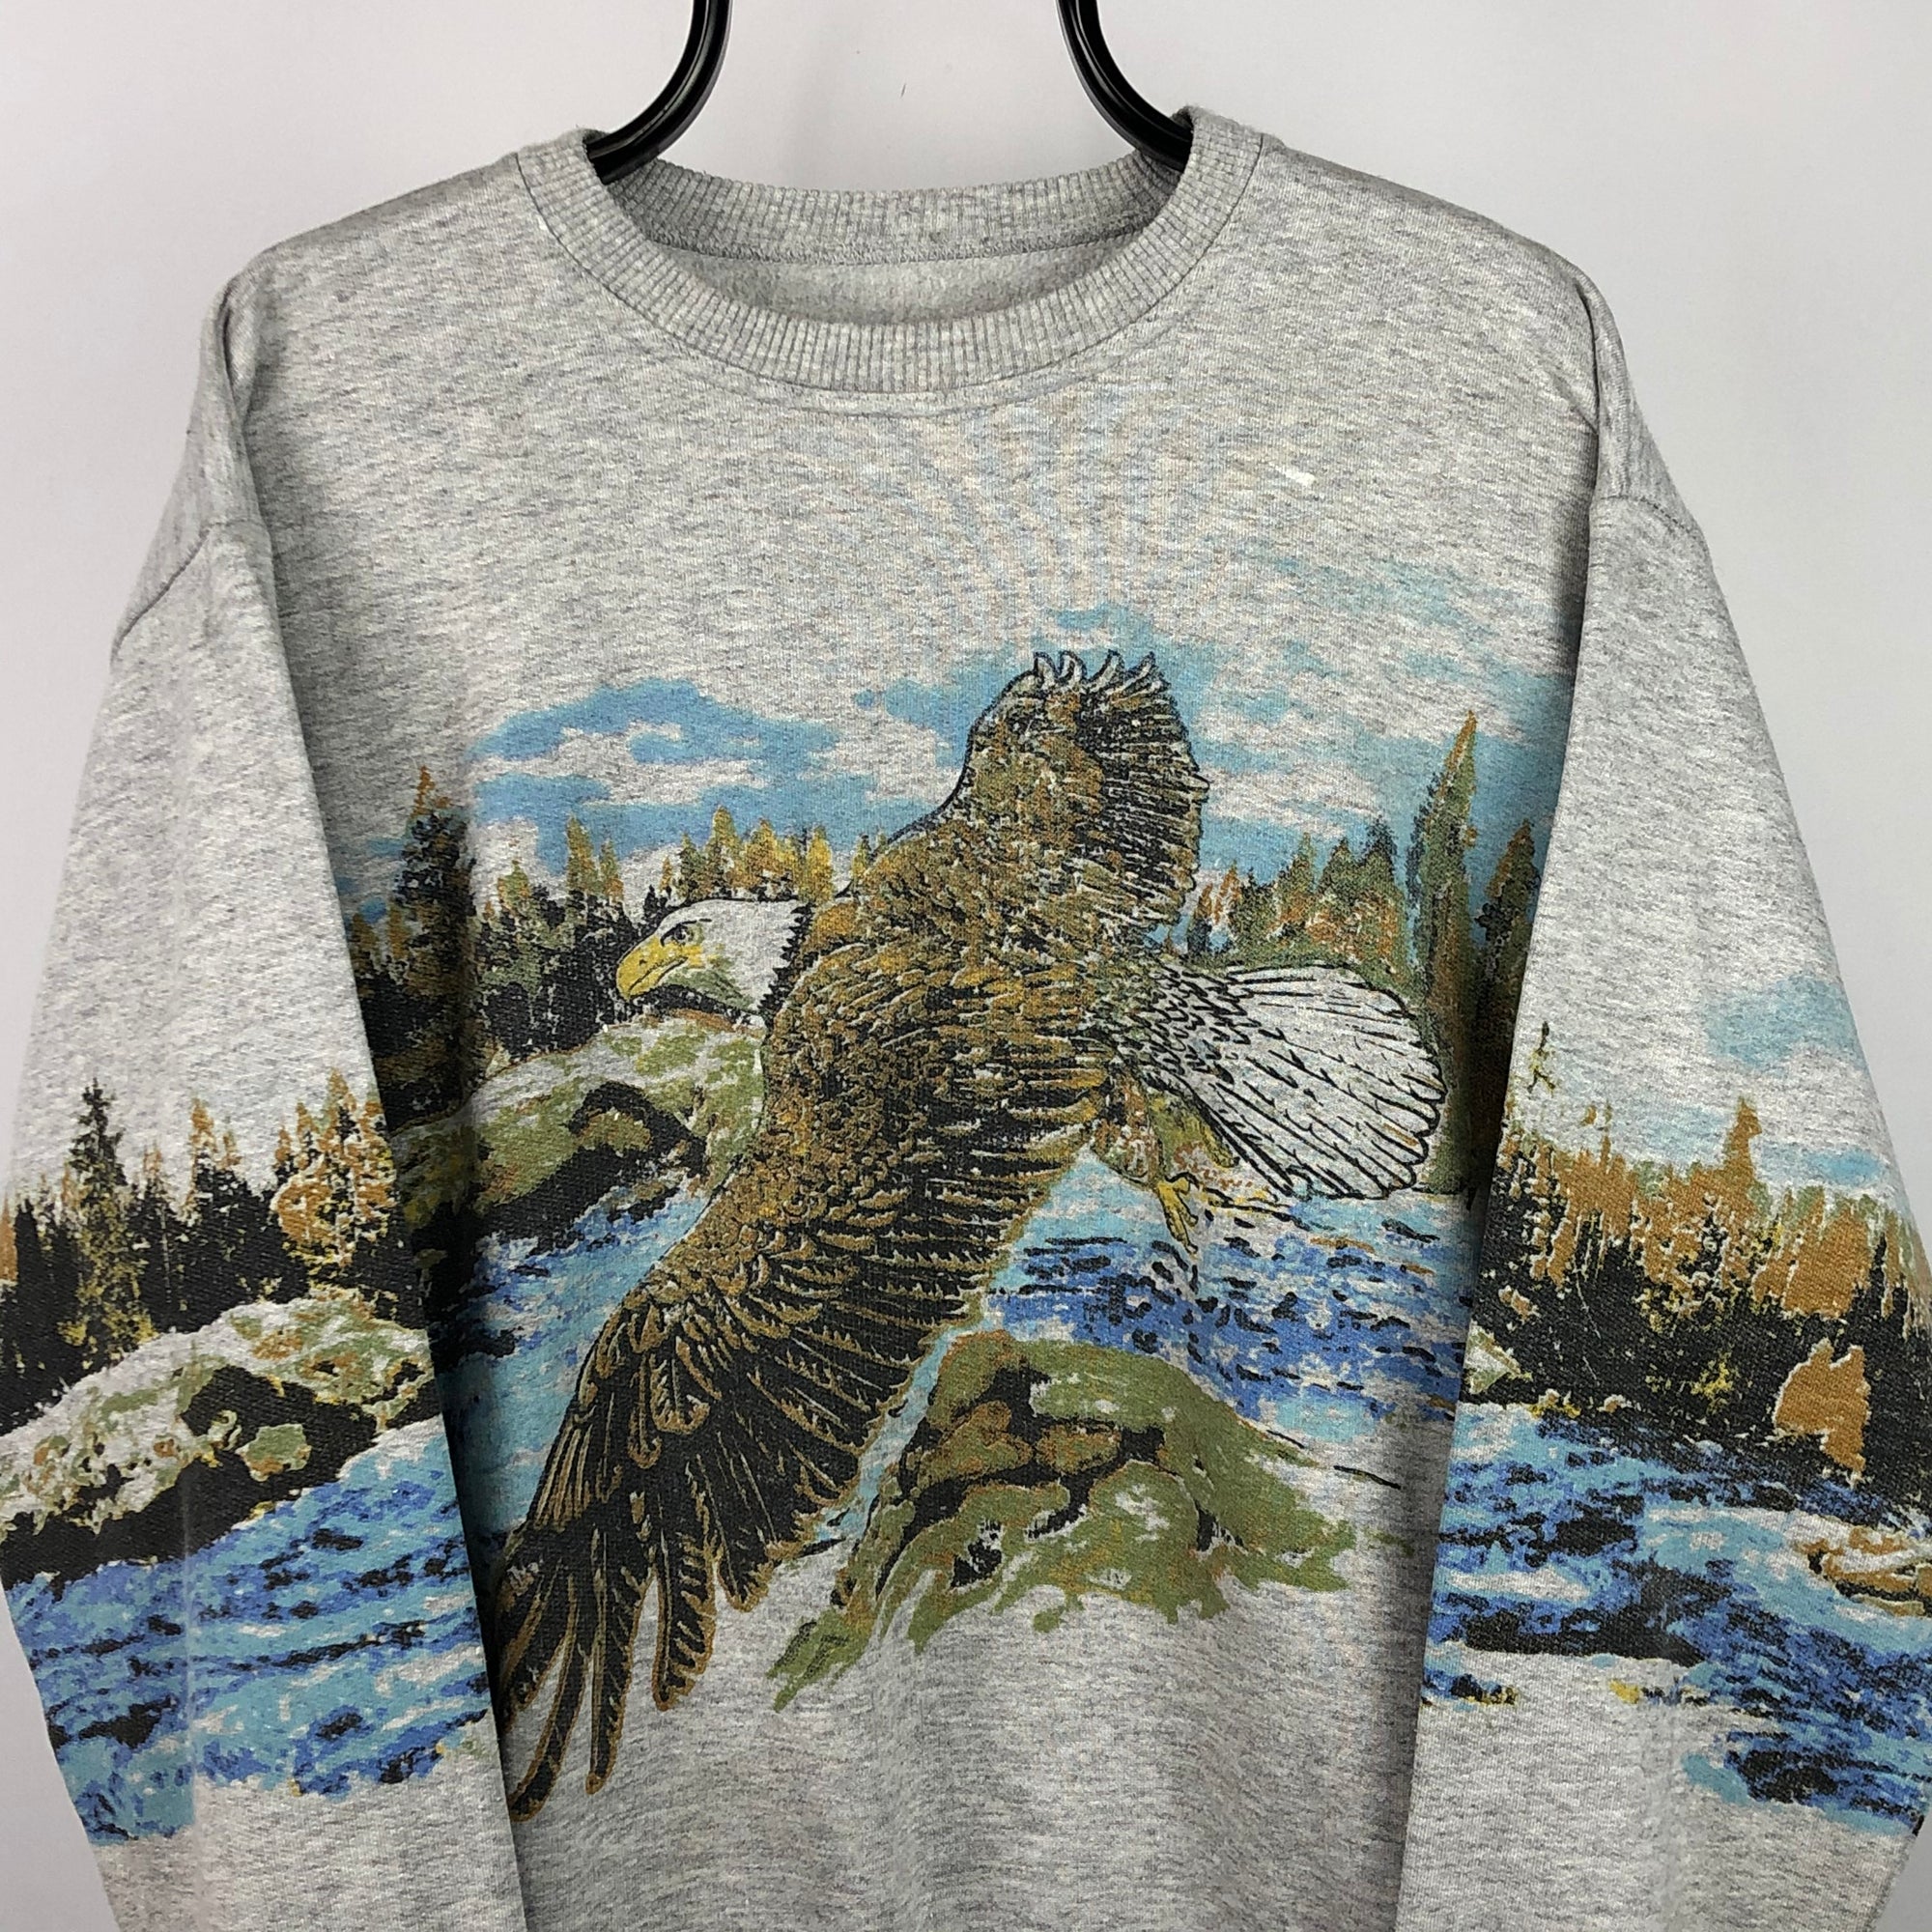 Vintage 80s Eagle Sweatshirt - Men's Medium/Women's Large